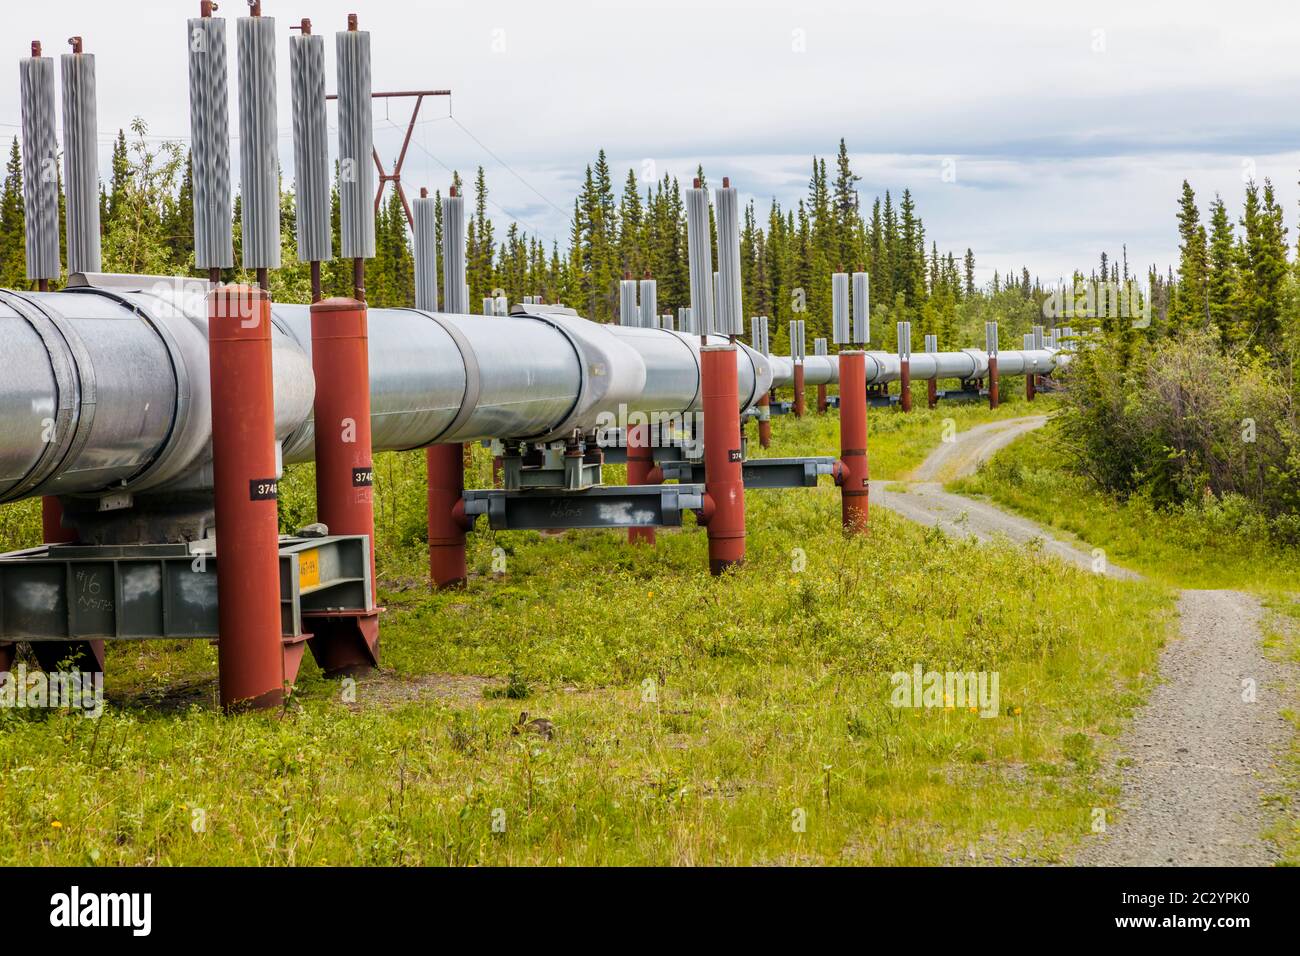 Alyeska Pipeline che attraversa il paesaggio, Glennallen, Alaska, USA Foto Stock